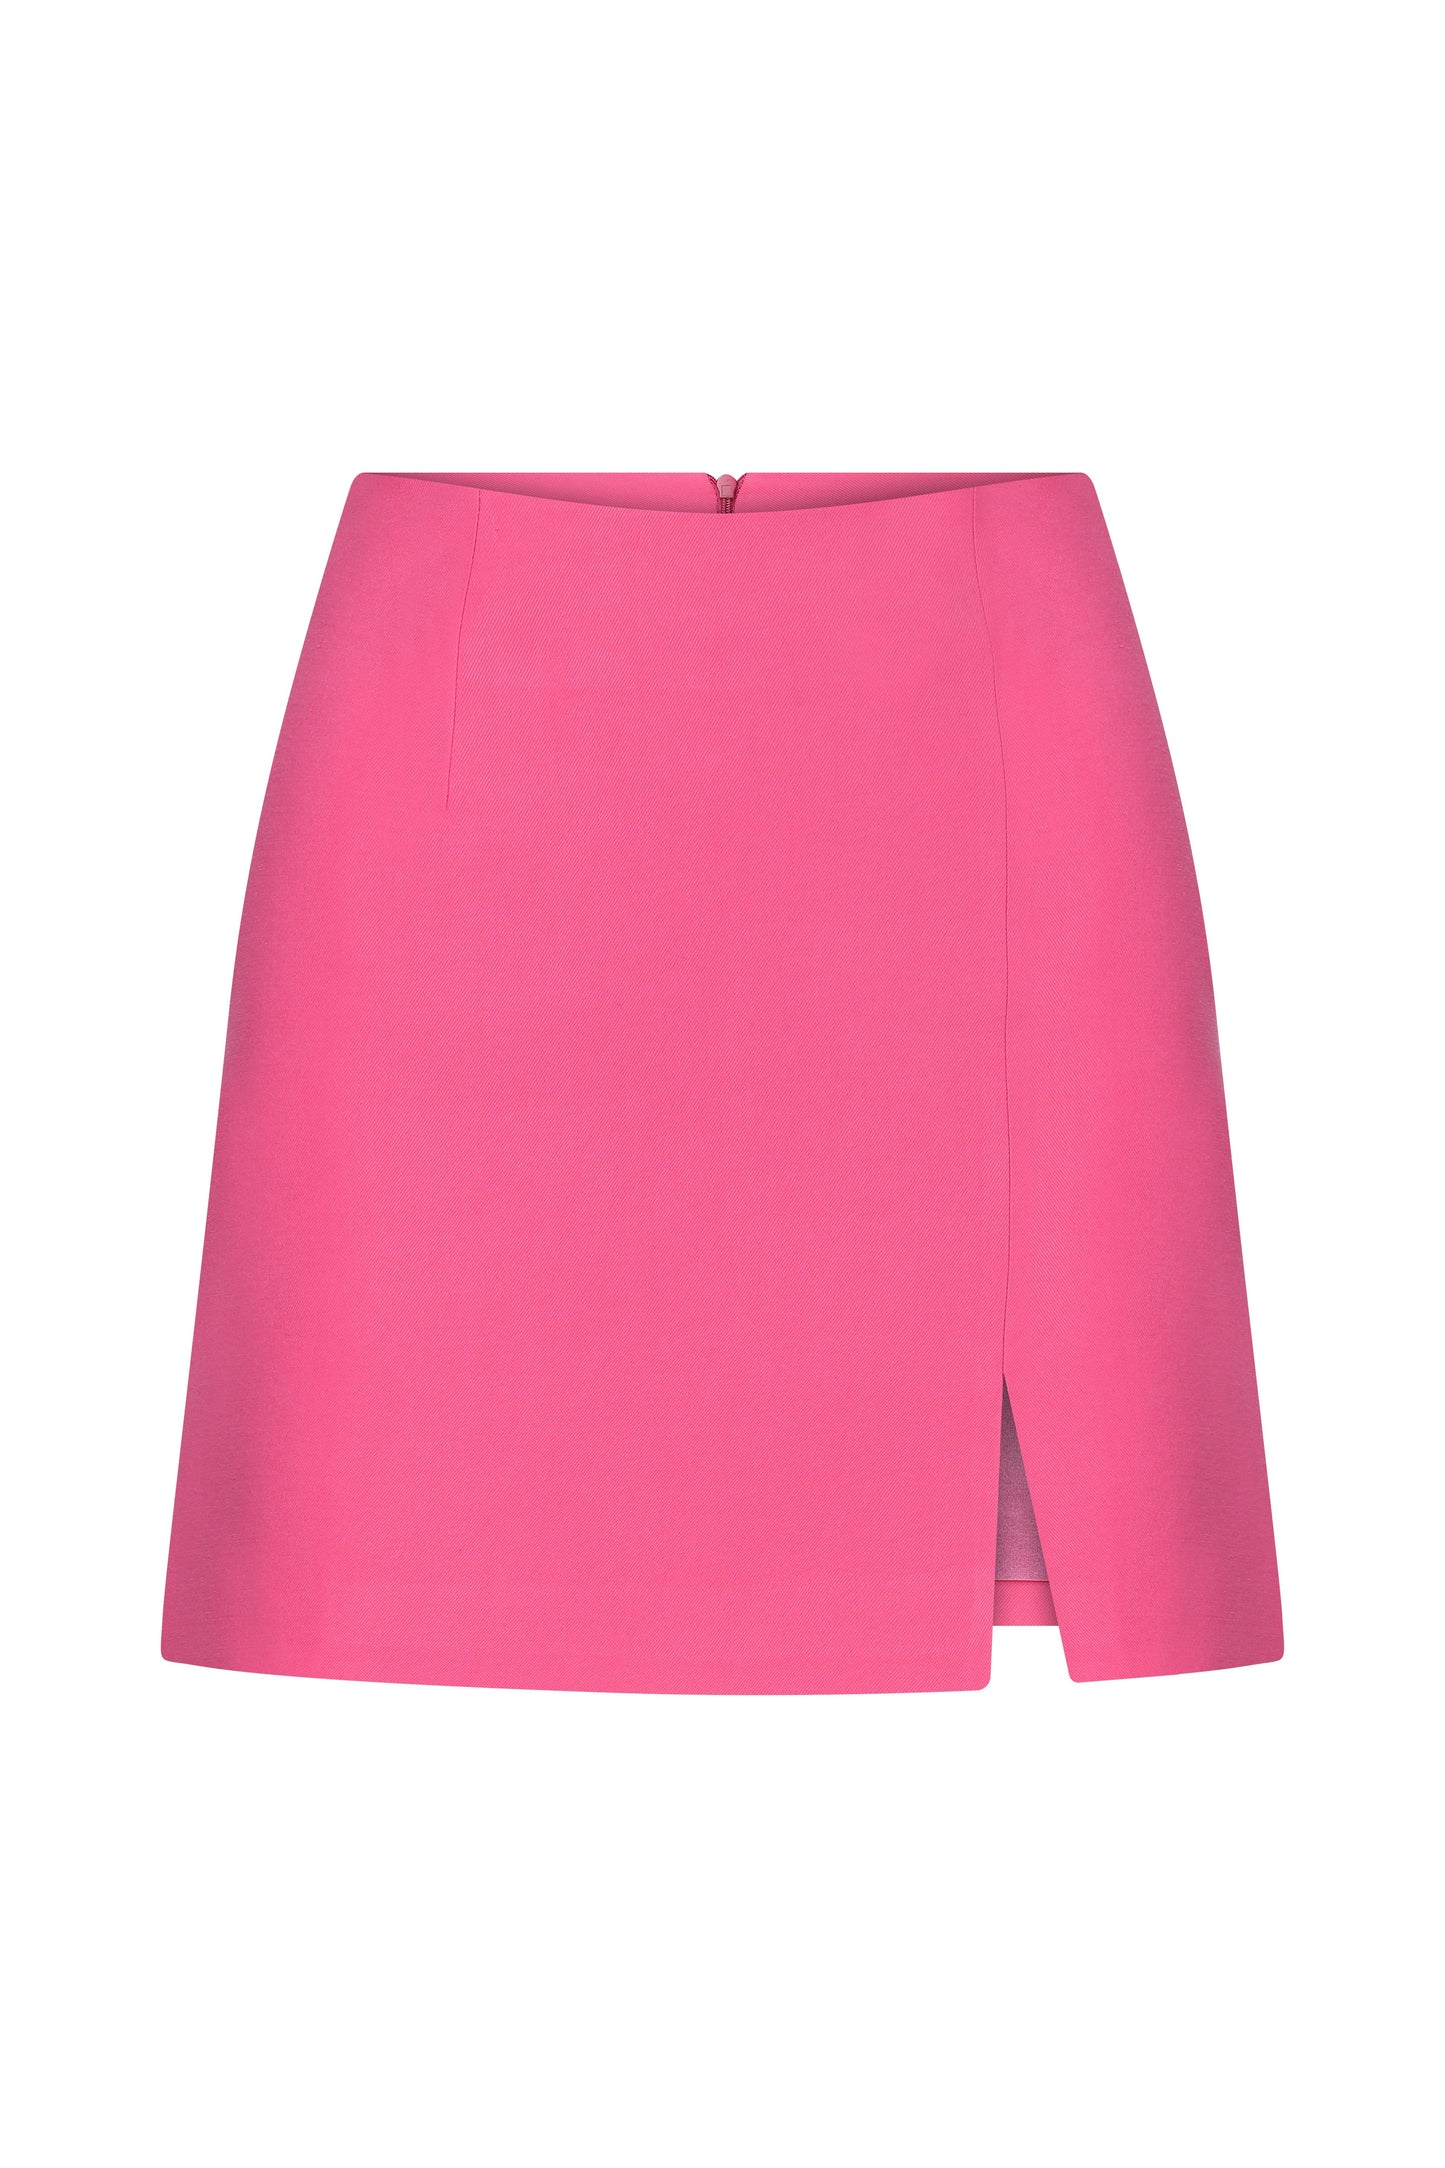 Vance Mini Skirt in Bubble Gum Pink